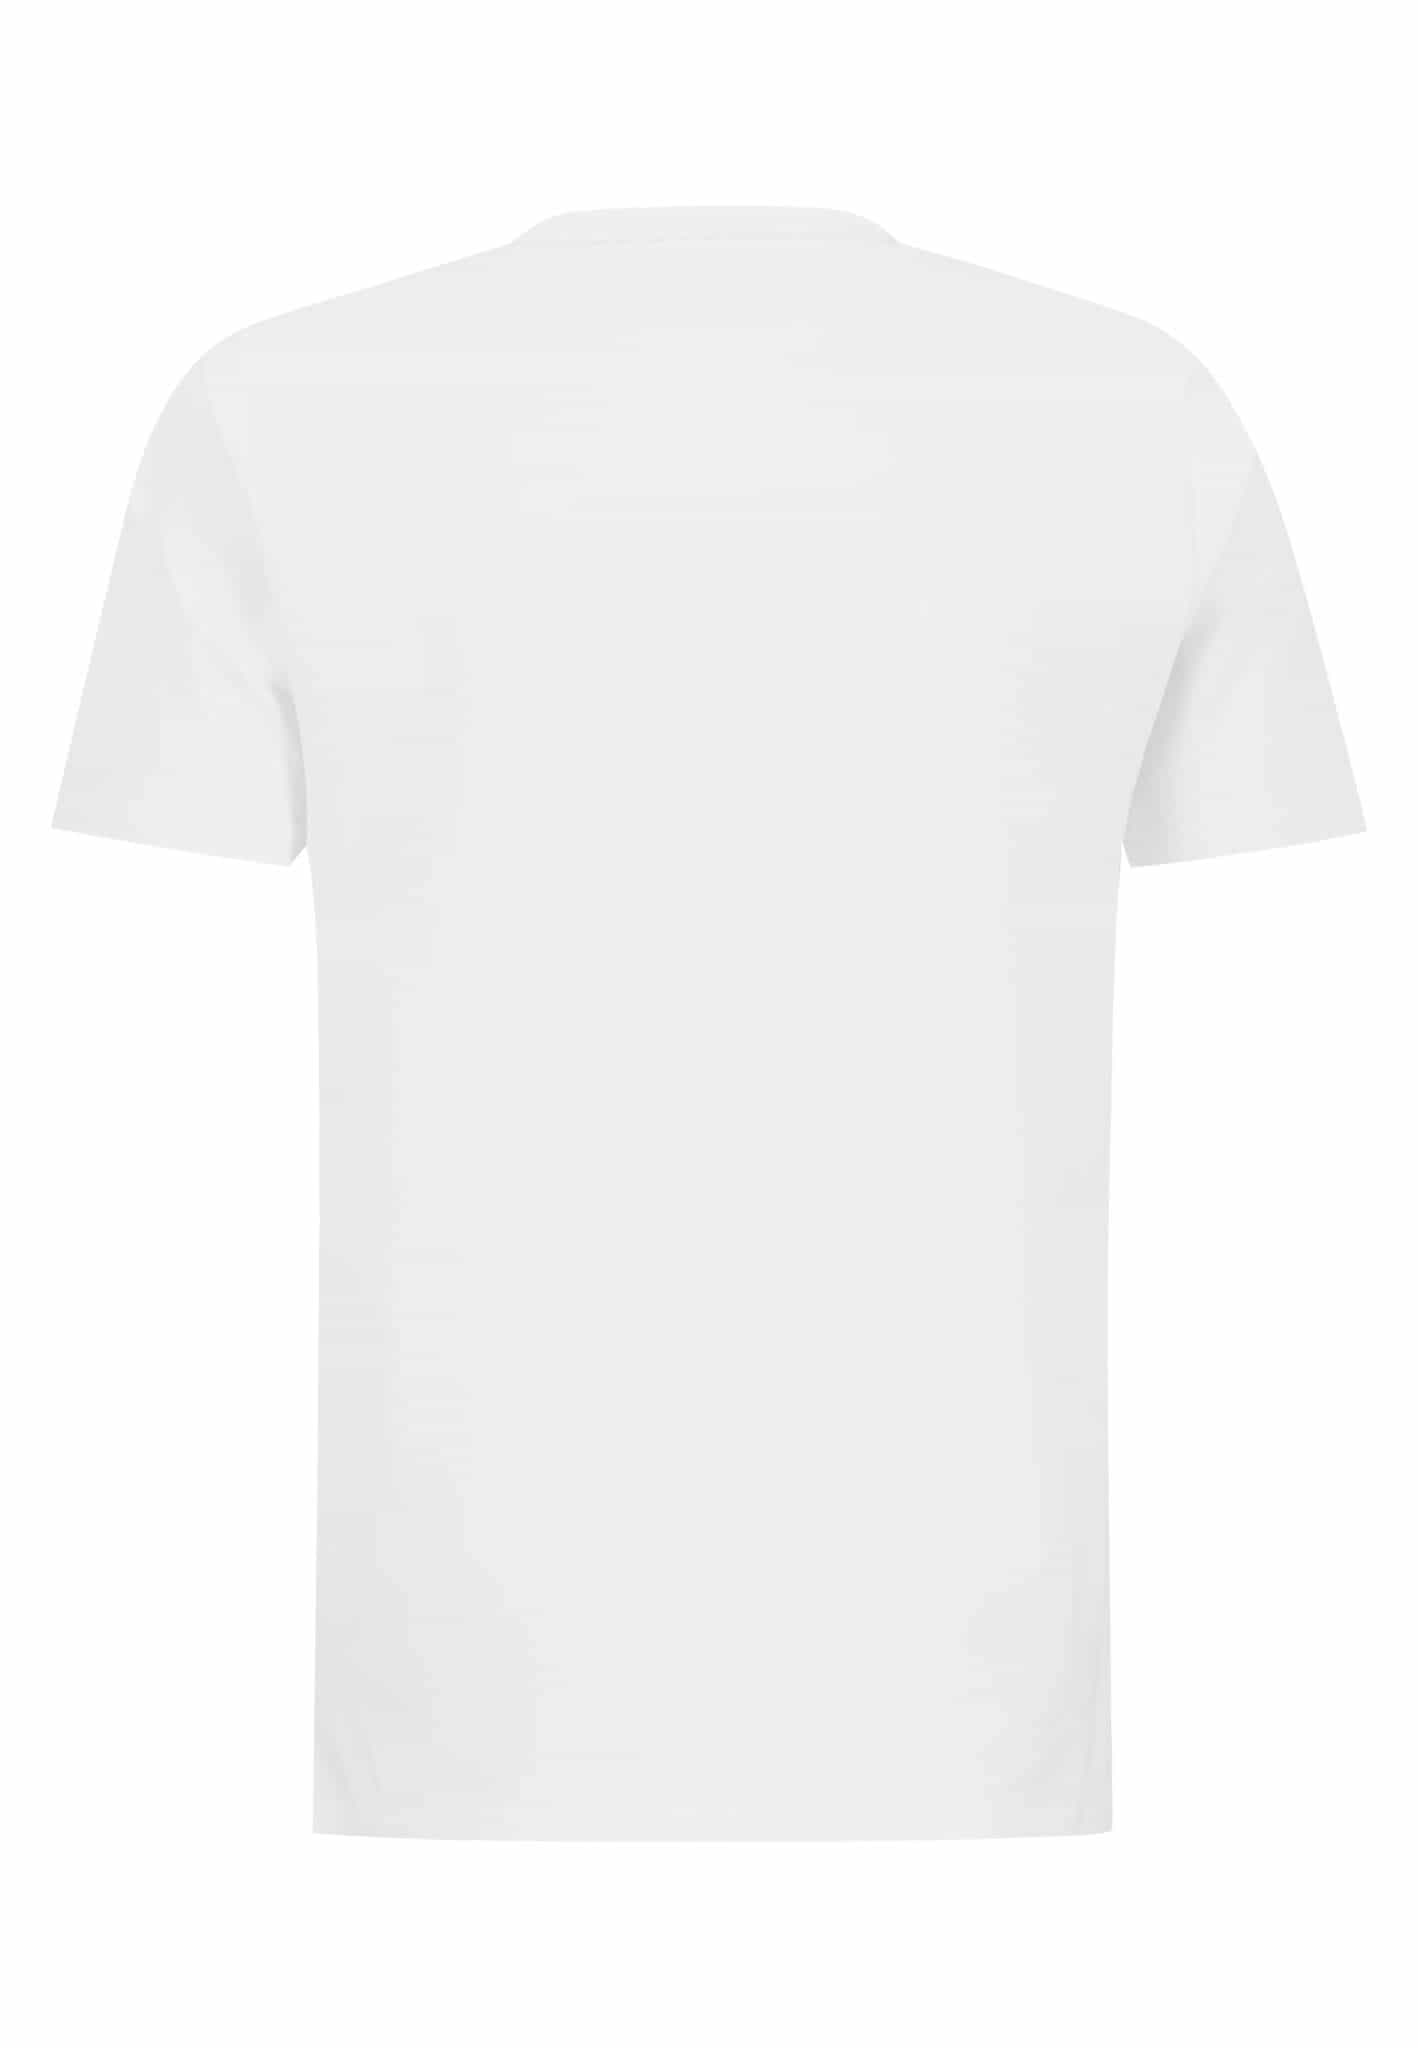 Fynch +UP Hatton T-Shirt - White Frontprint